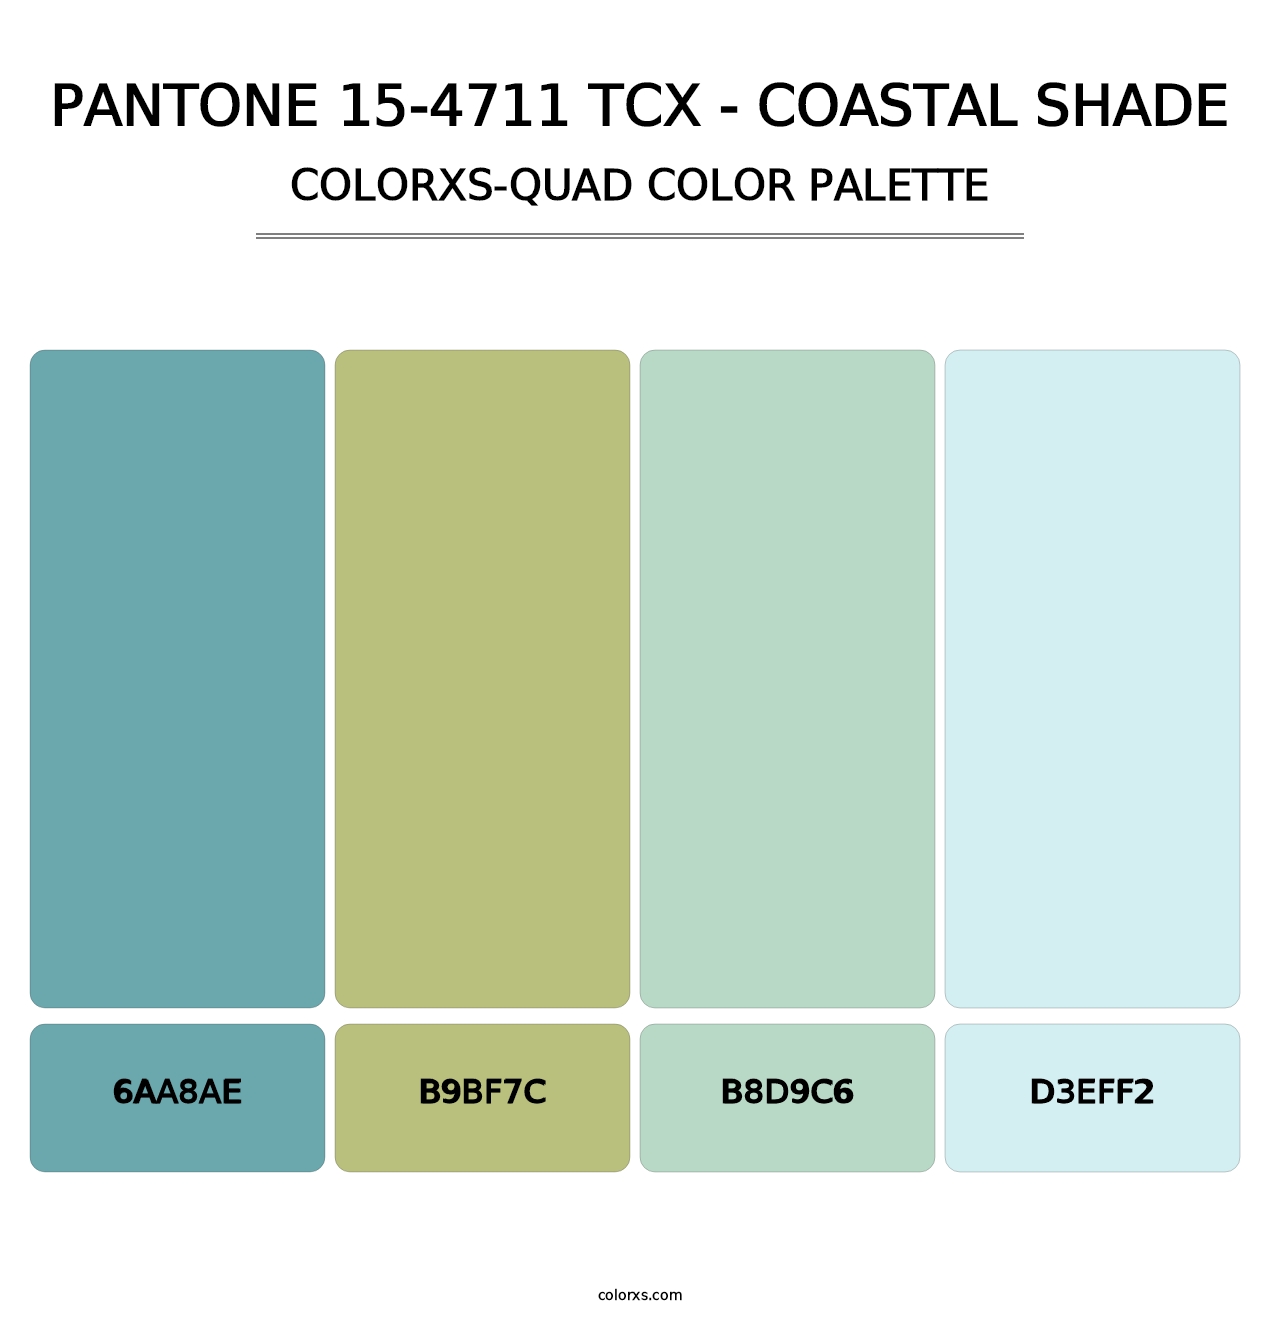 PANTONE 15-4711 TCX - Coastal Shade - Colorxs Quad Palette